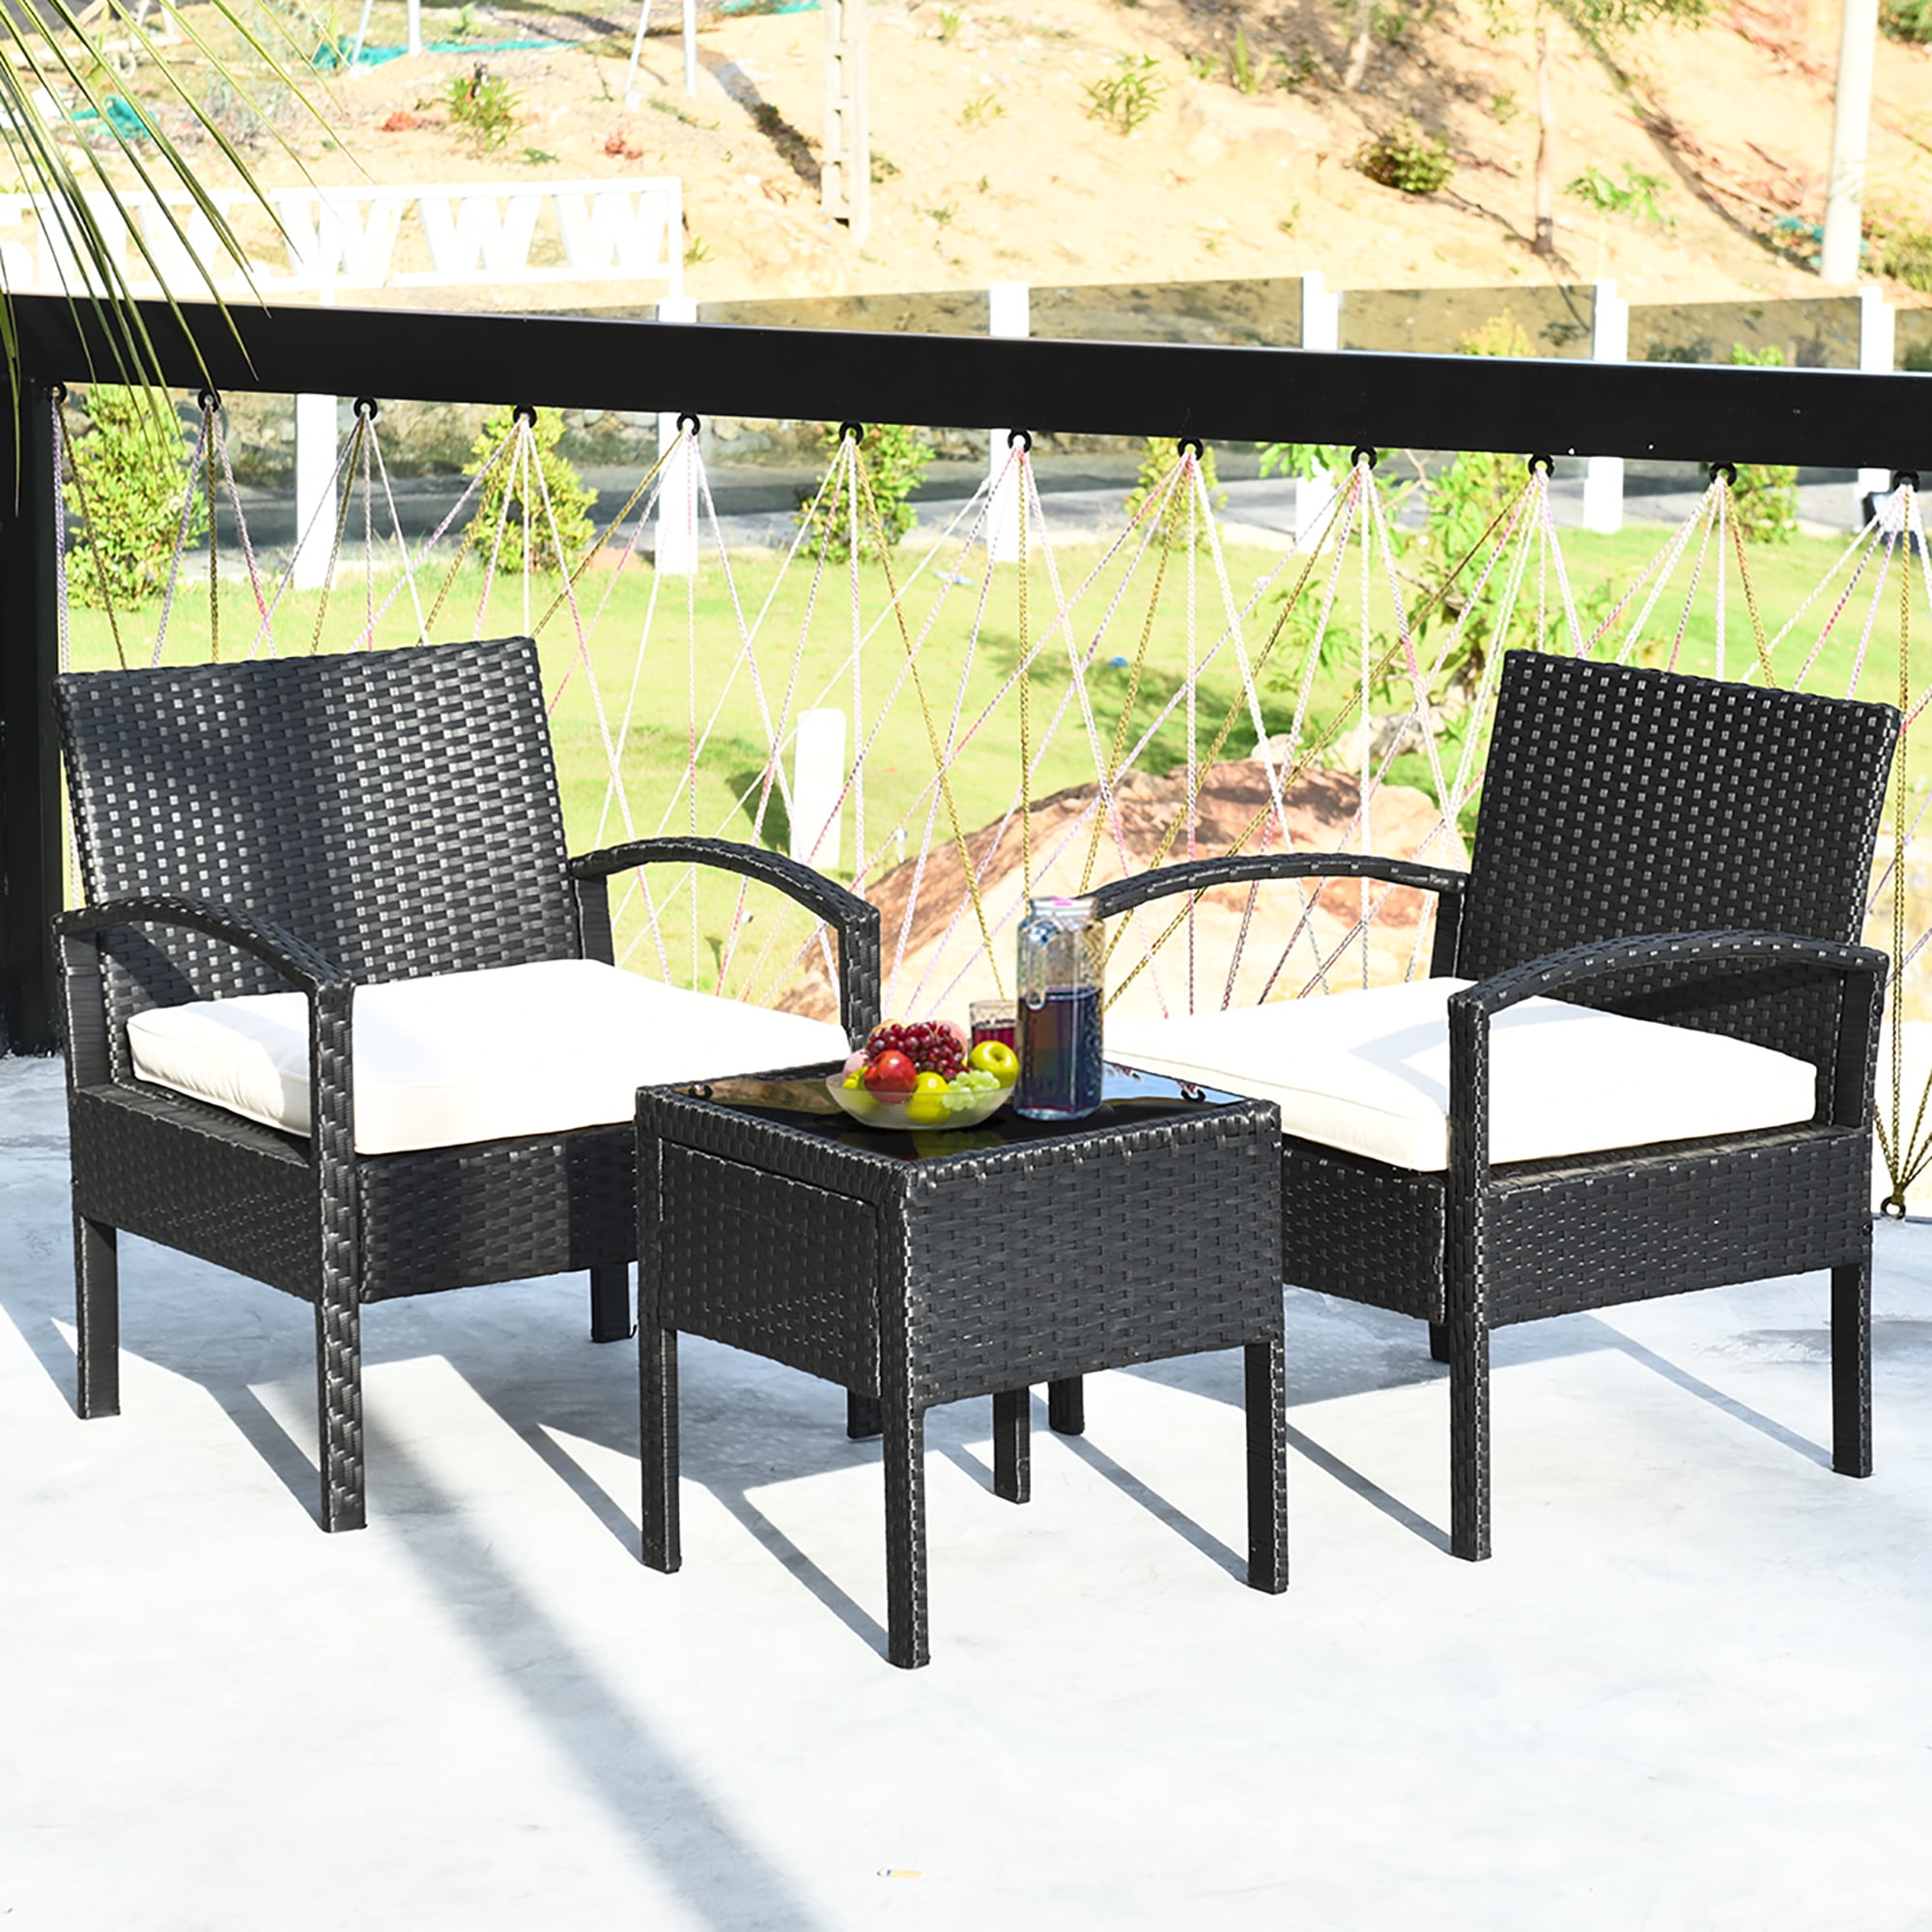 4pc Rattan Garden Patio Sofa Cushion Chairs Table Set Outdoor Bistro Furniture 